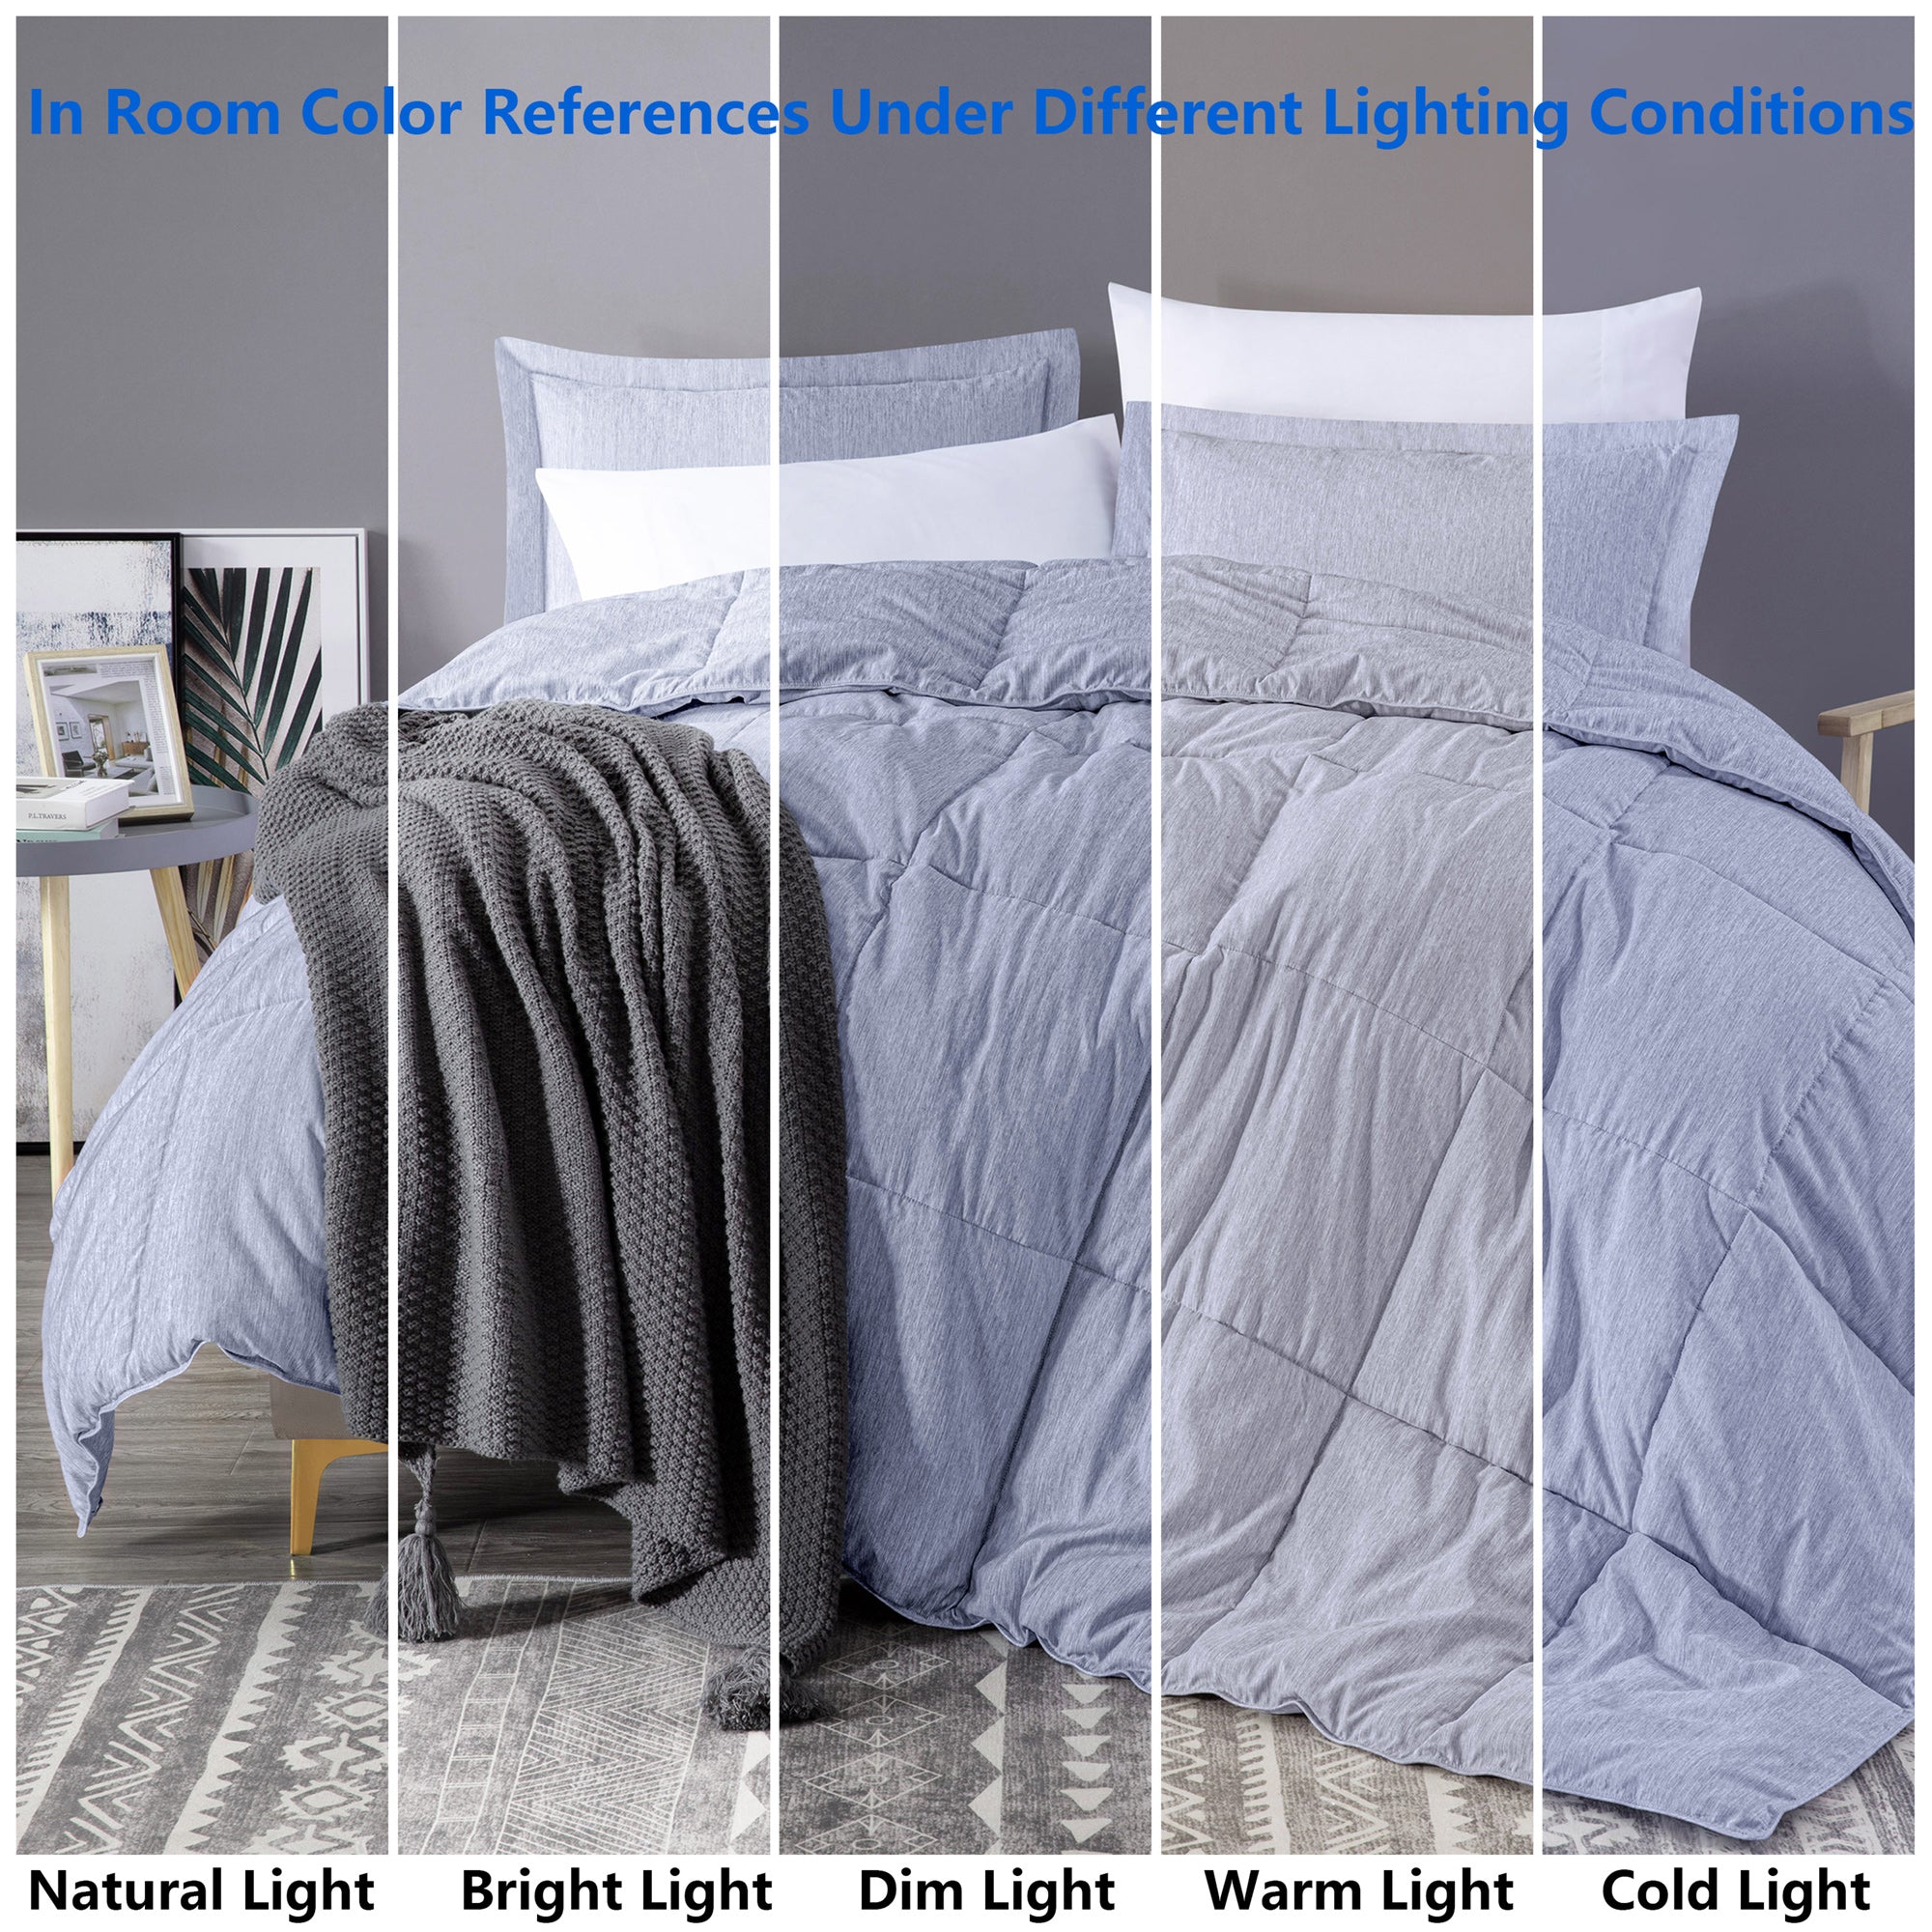 Down Alternative Comforter Set - 3-Pc, Cationic Dyeing & Jacquard Line, Machine Washable, Includes Duvet Insert & 2 Envelope Pillow Shams, kingsleytrend, Comforter Set, down-alternative-king-comforter-set-all-season-king-size-comforter-set-3-piece-soft-breathable-down-comforter-king-size-lightweight-quilted-duvet-insert-with-corner-tabs-and-2-pillow-shams, blue, comforter set, gray, MCF, kingsleytrend